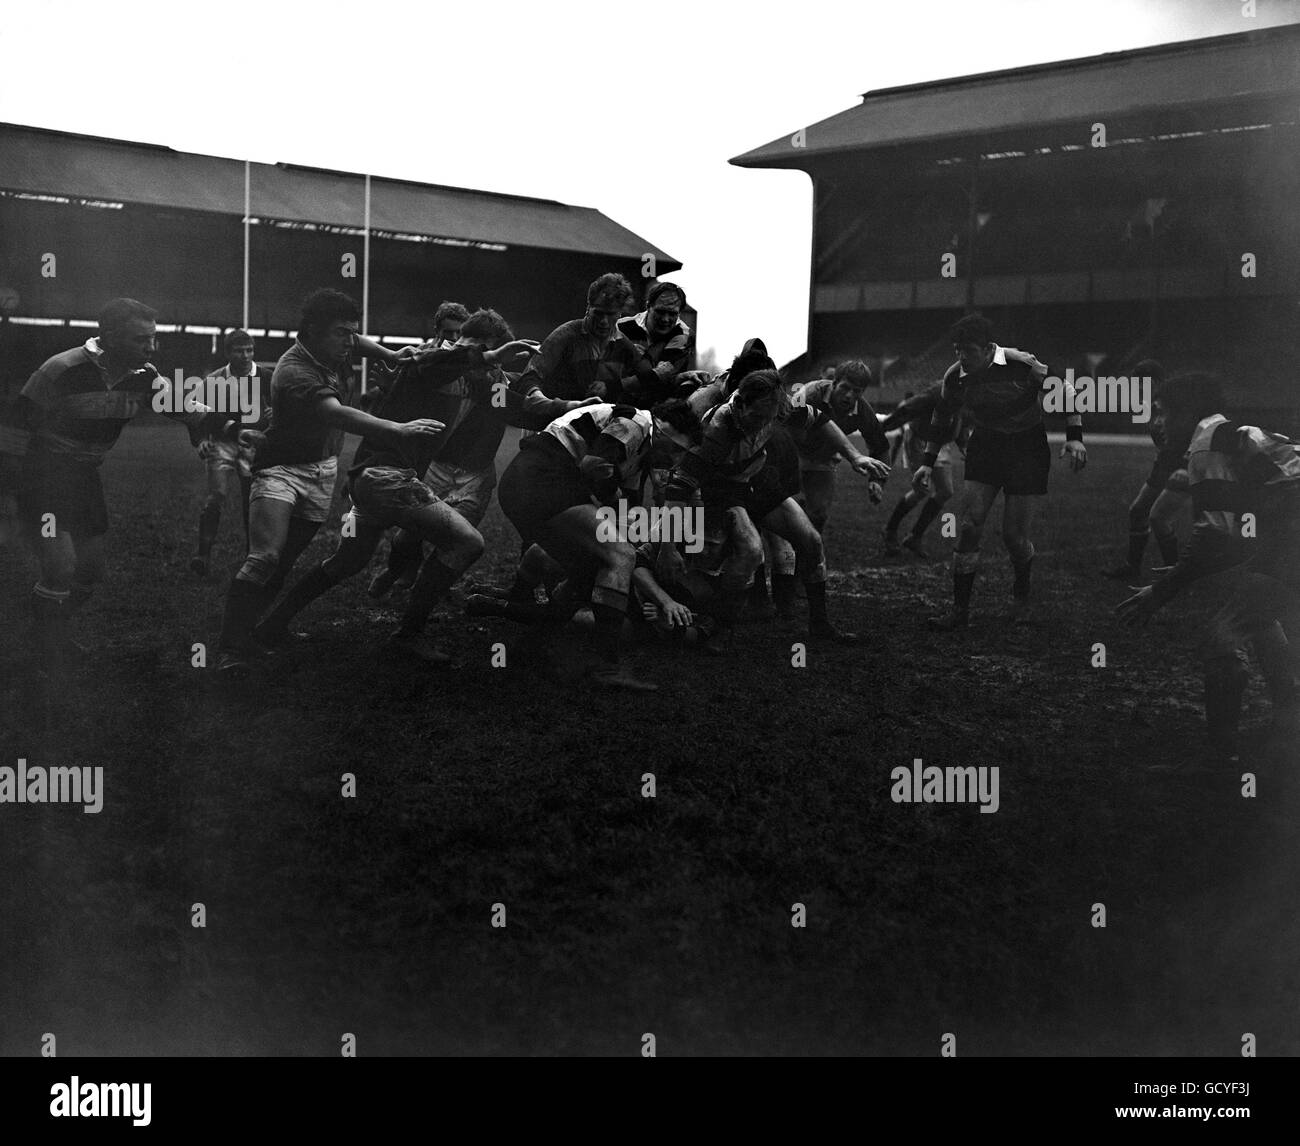 Rugby Union - Harlequins v Cardiff - Twickenham Stock Photo